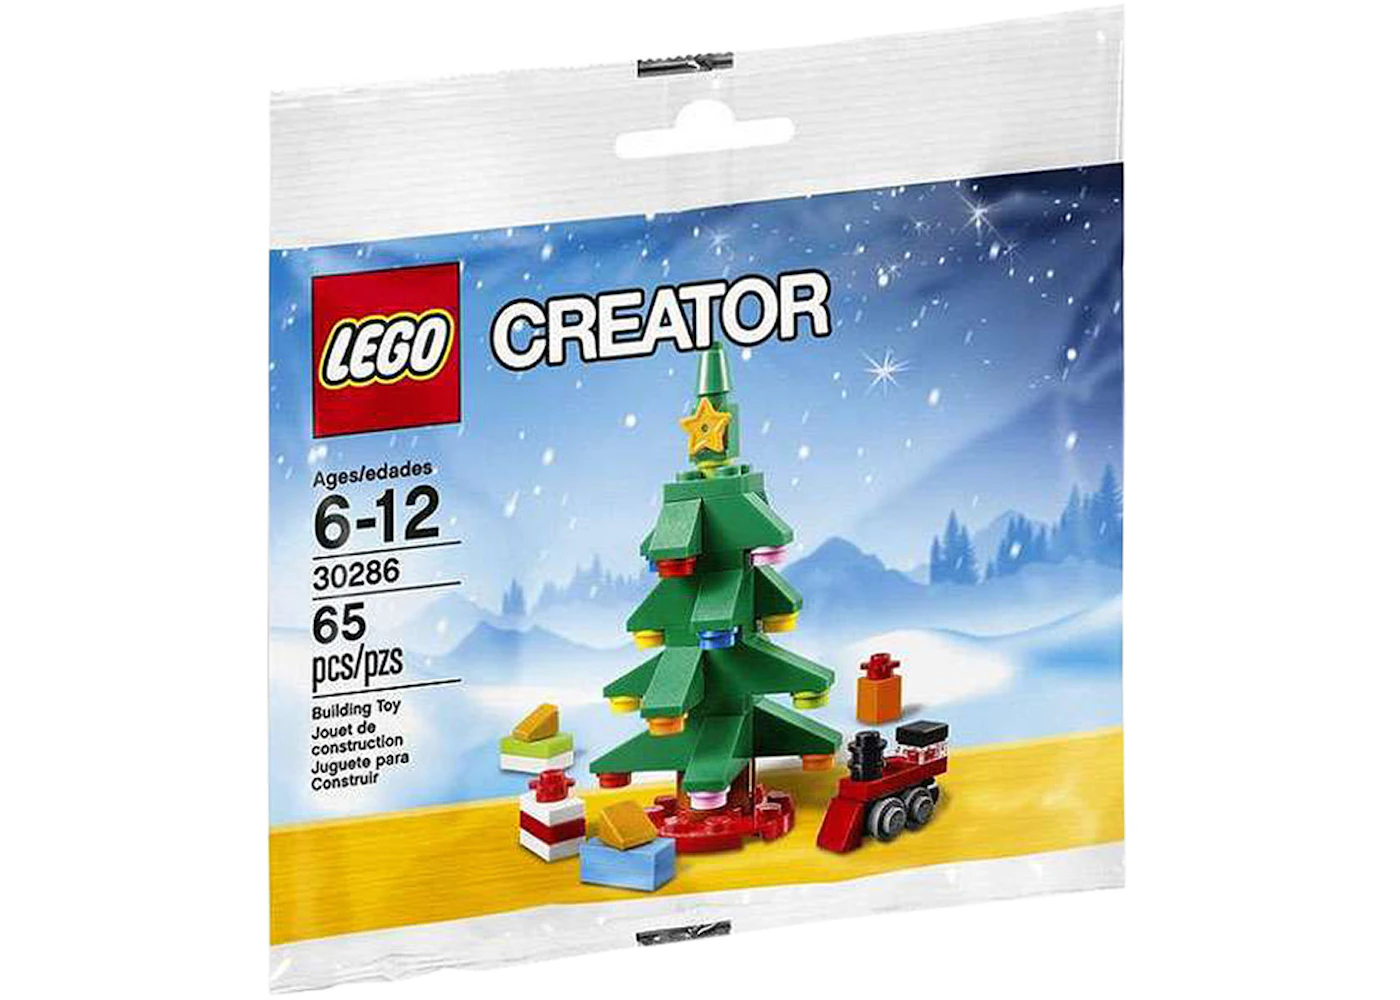 LEGO Creator 2015 Christmas Tree Set 30286 - US